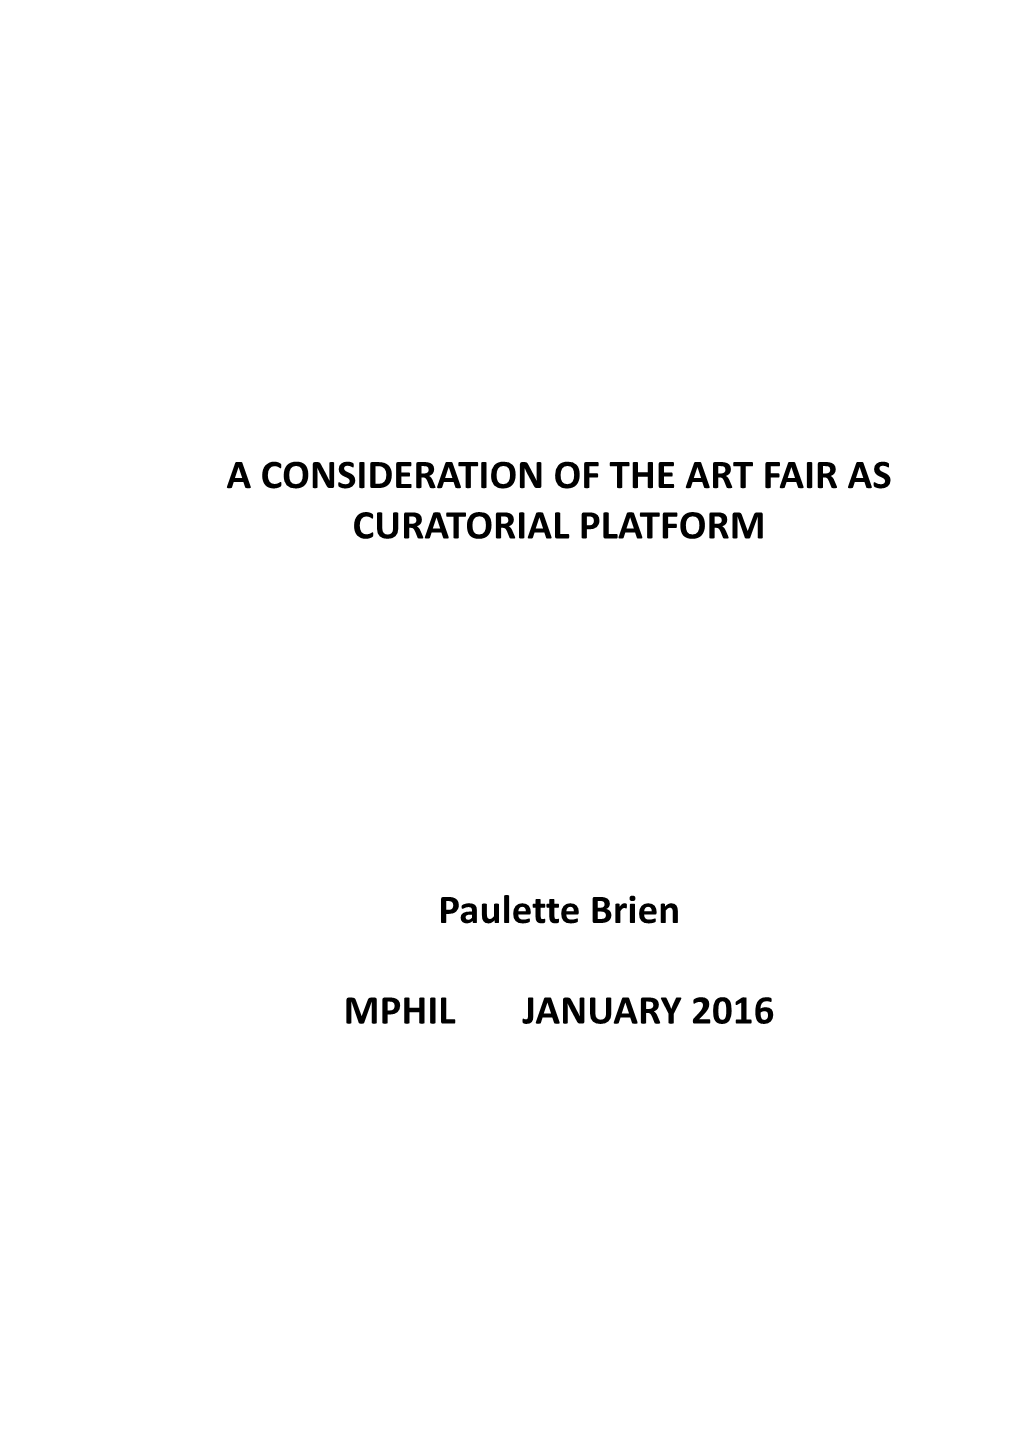 Paulette Brien a Consideration of the Art Fair As Curatorial Platform